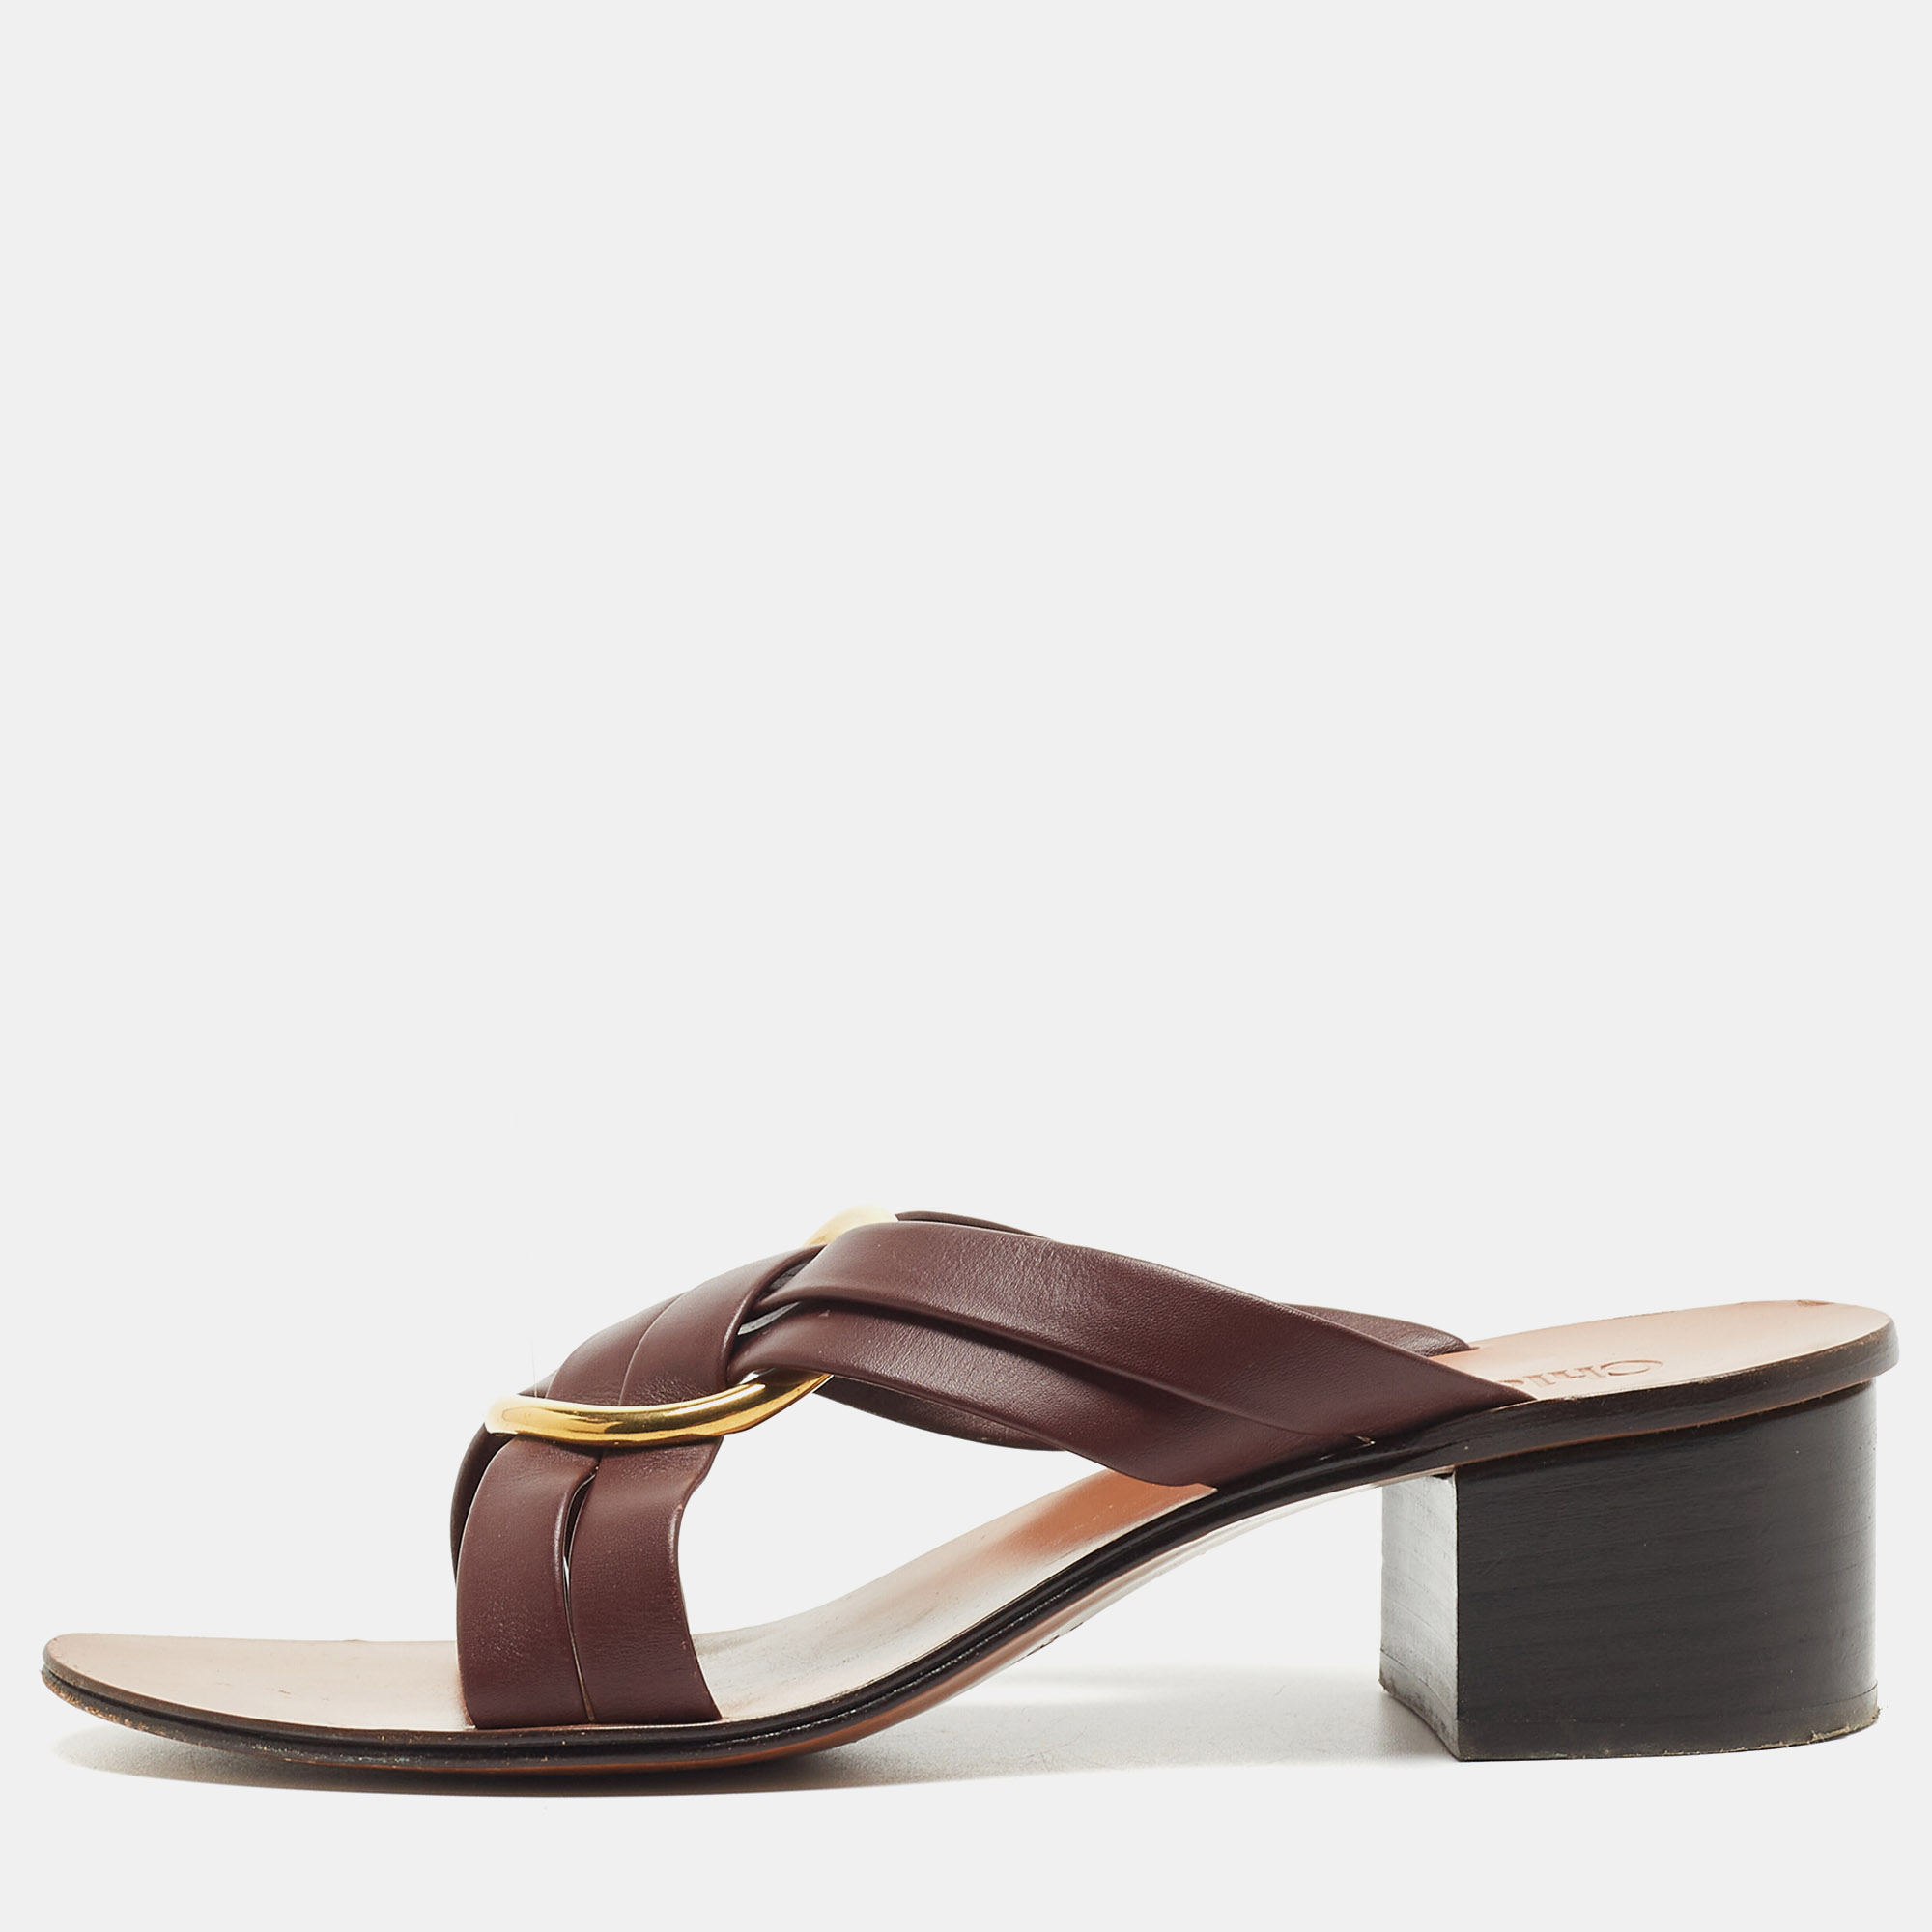 Chloe Burgundy Leather Rony Slide Sandals Size 39